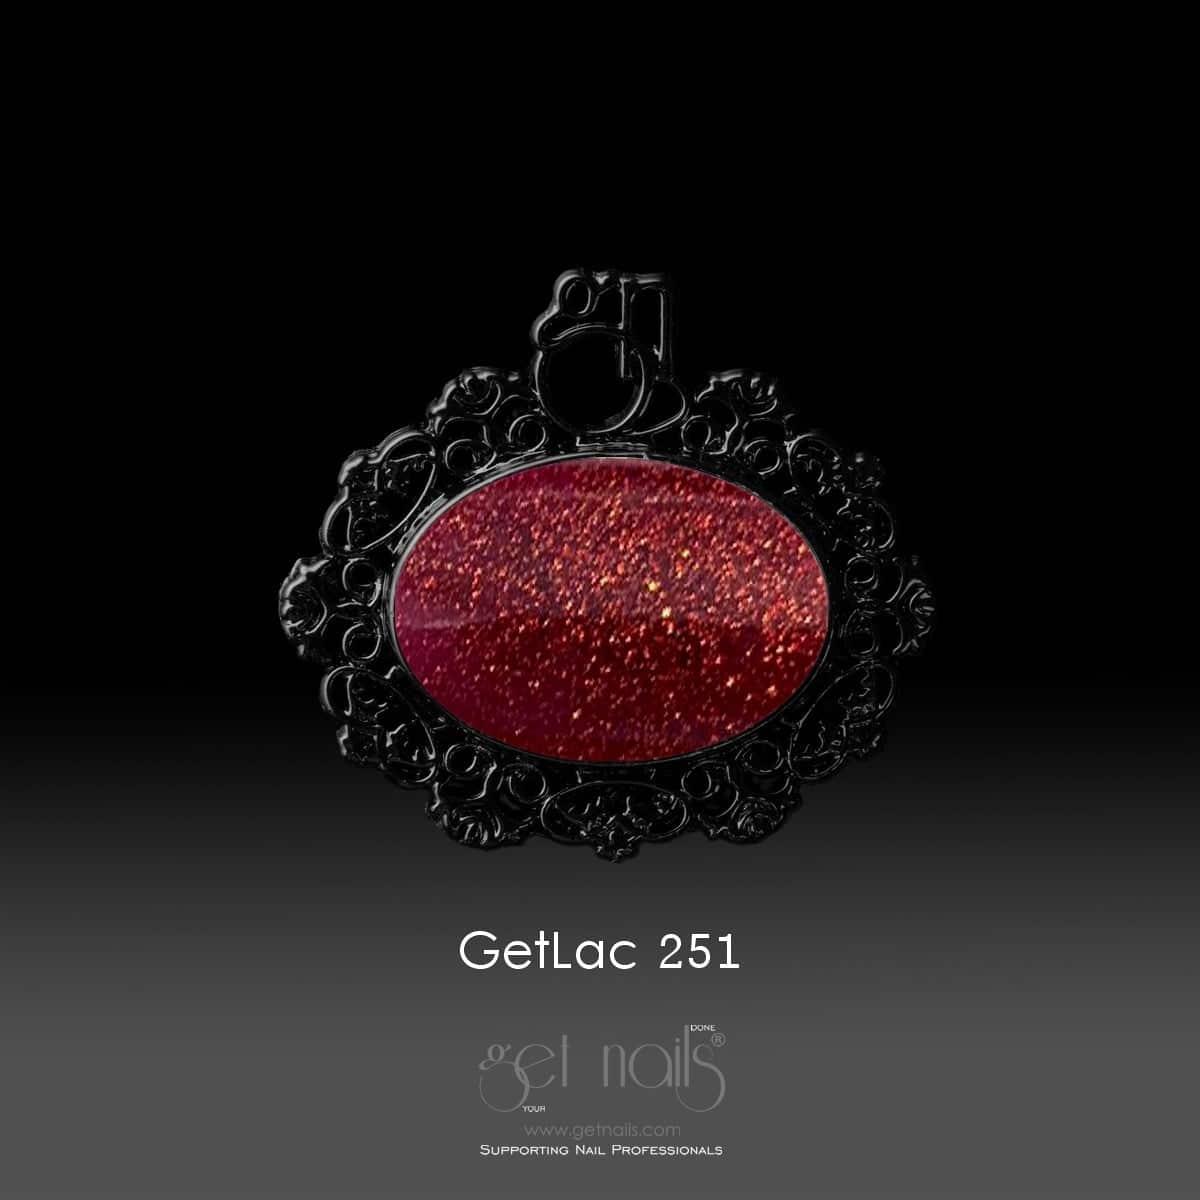 Get Nails Austria - GetLac 251 15g